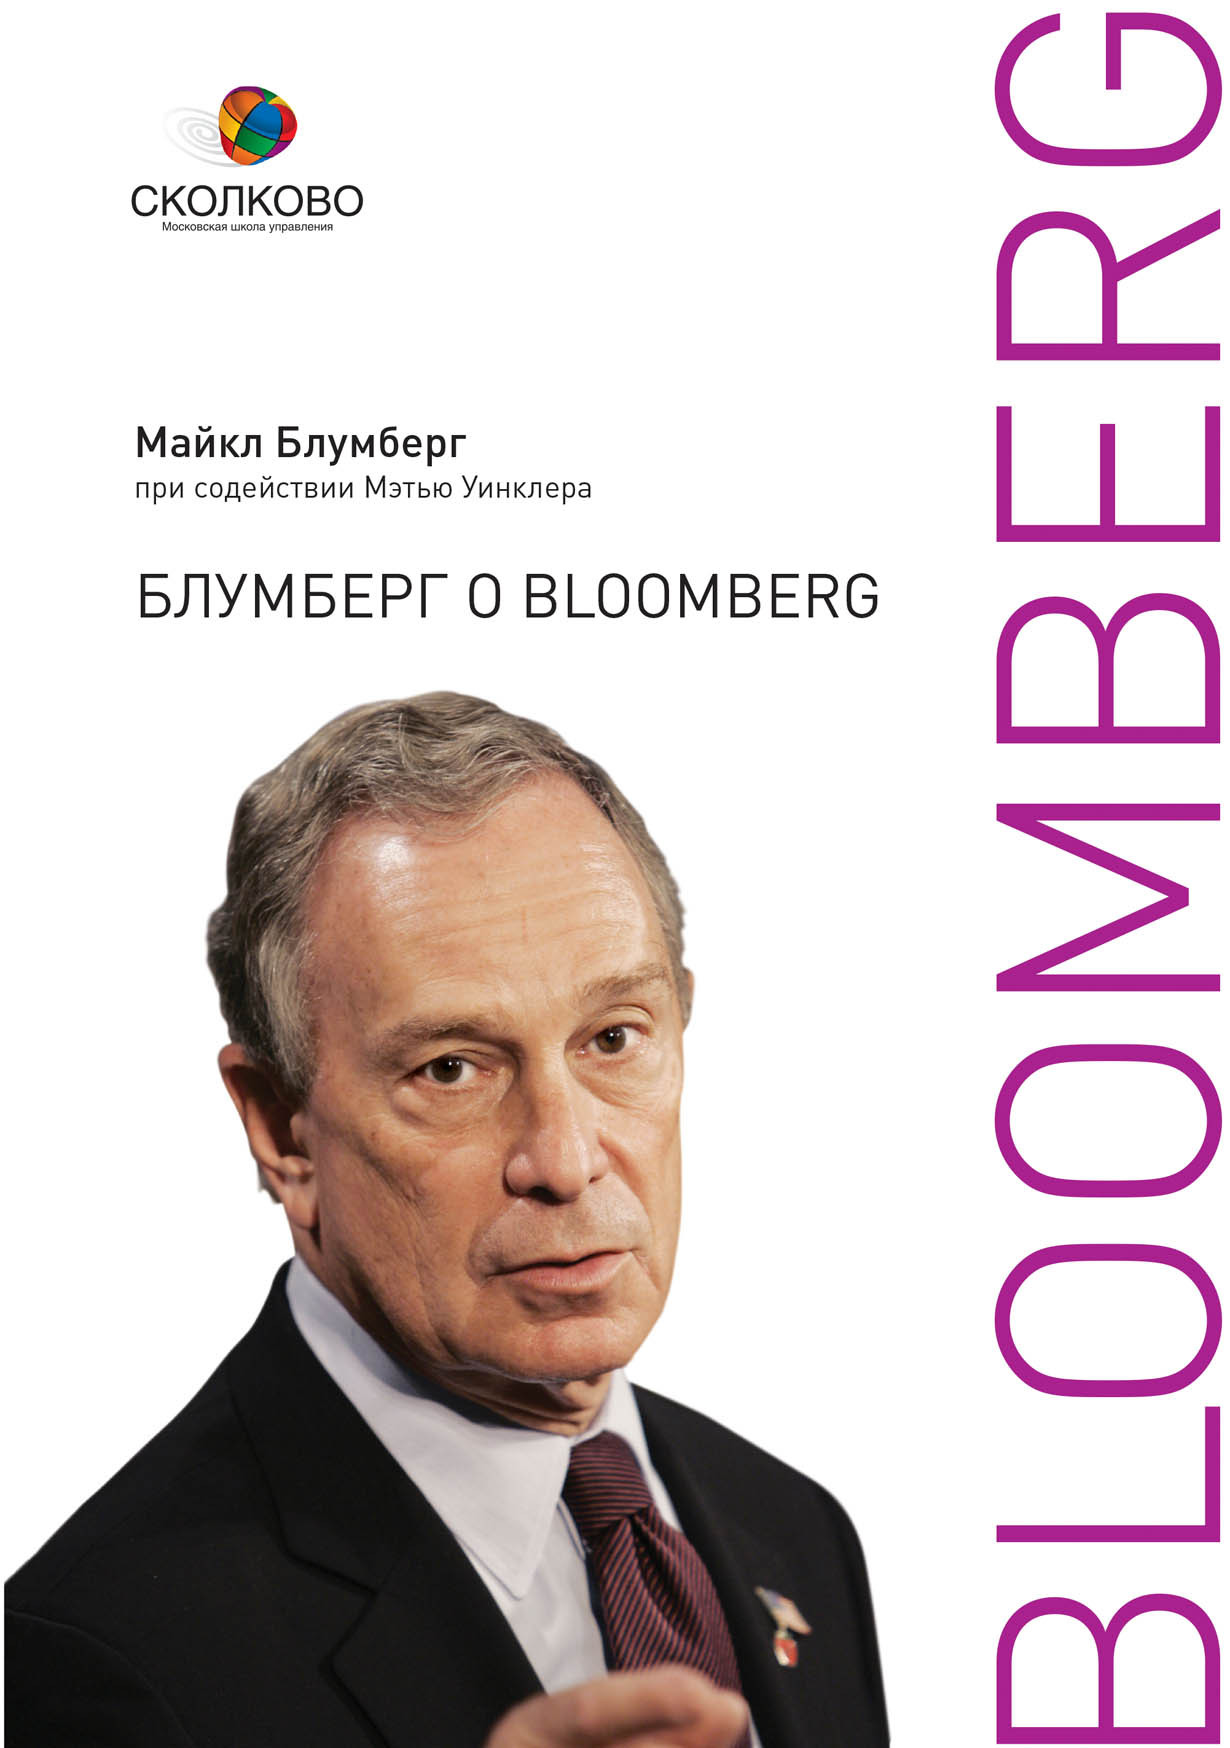 Блумберг о Bloomberg обложка.